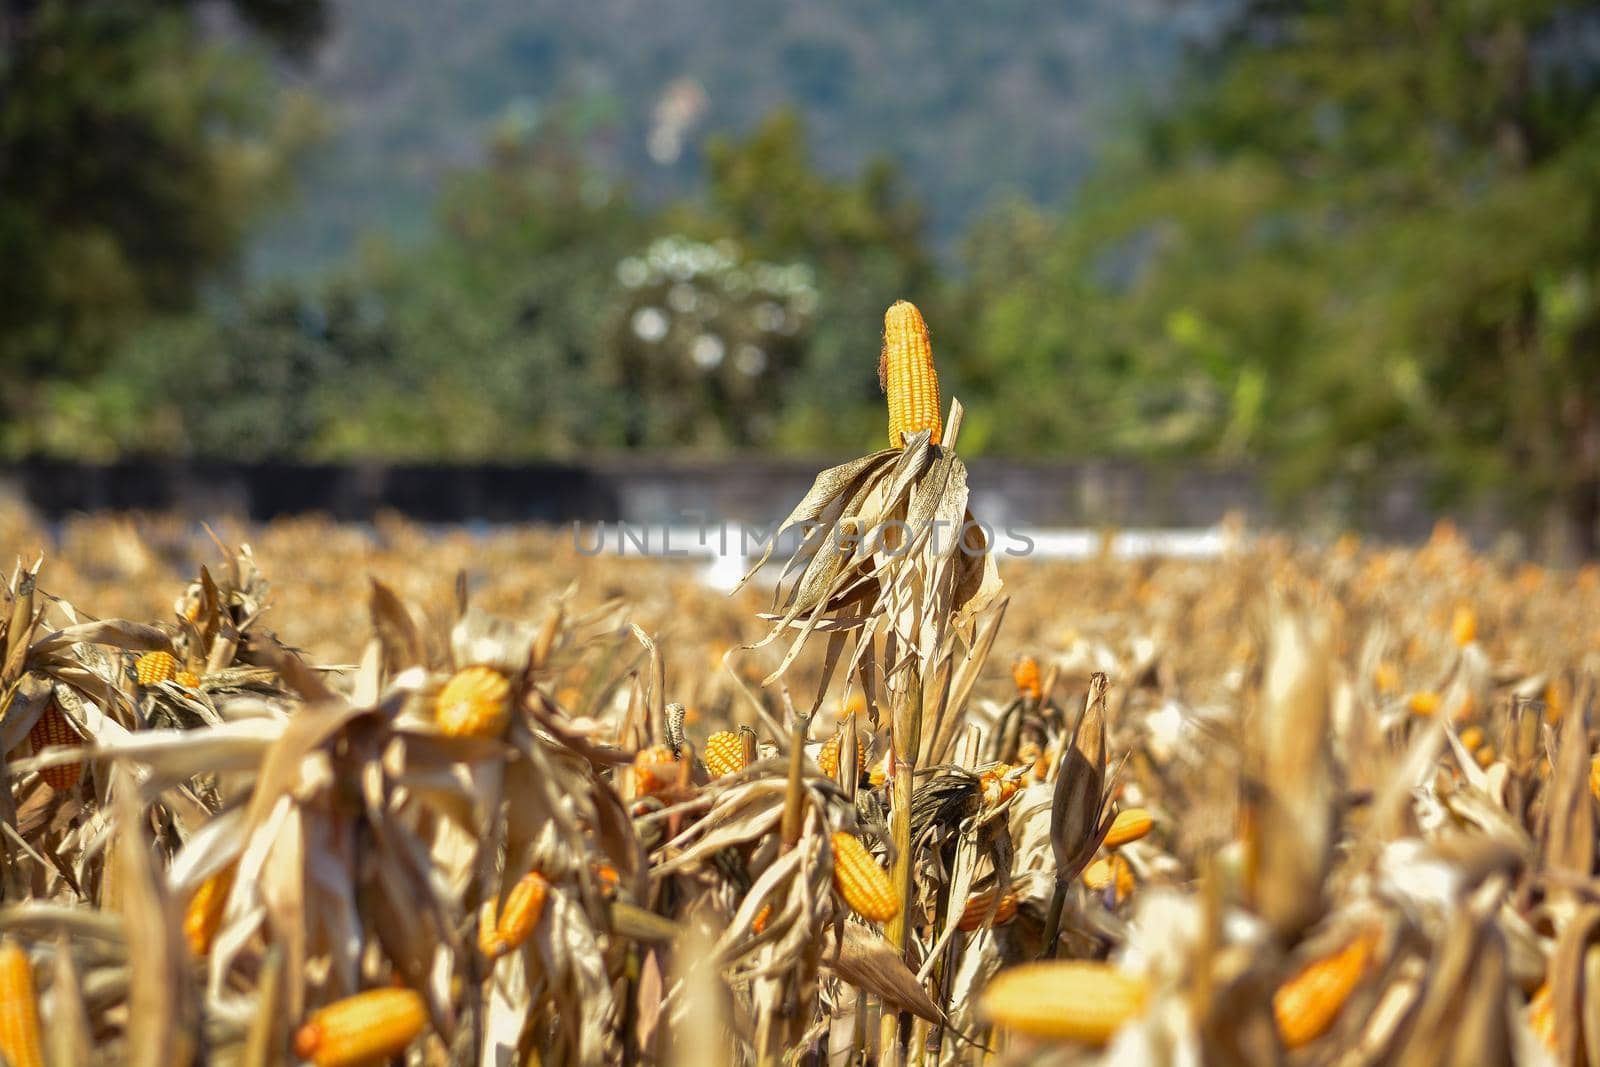 Closeup of Cob Corn in Farming Field or Garden with morning Countryside Environment.